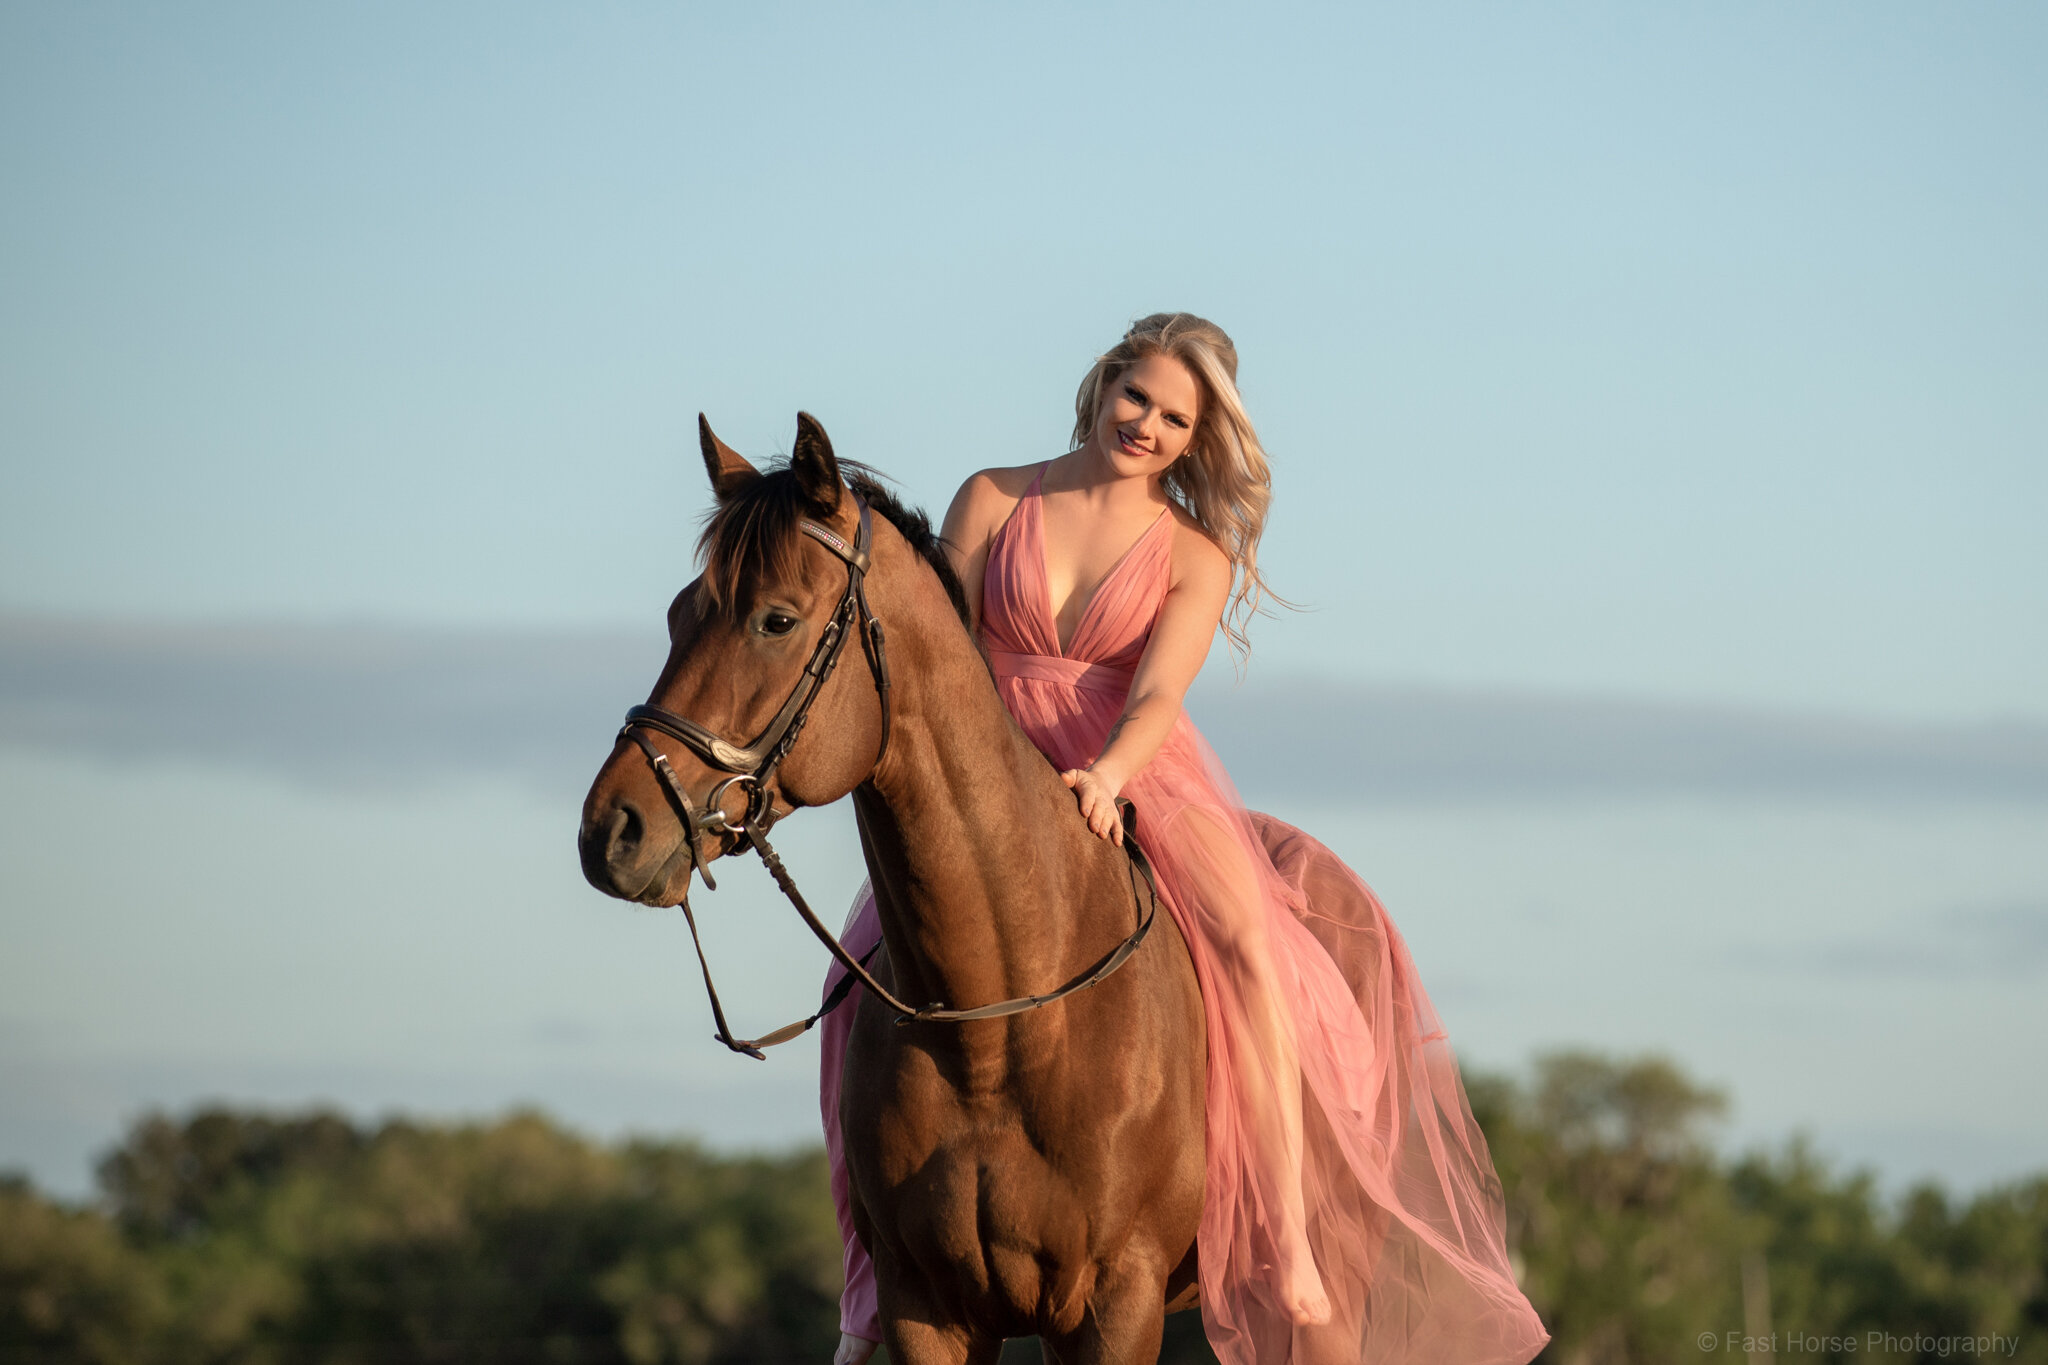 Fast Horse Photography_Stephanie Watko-3.jpg